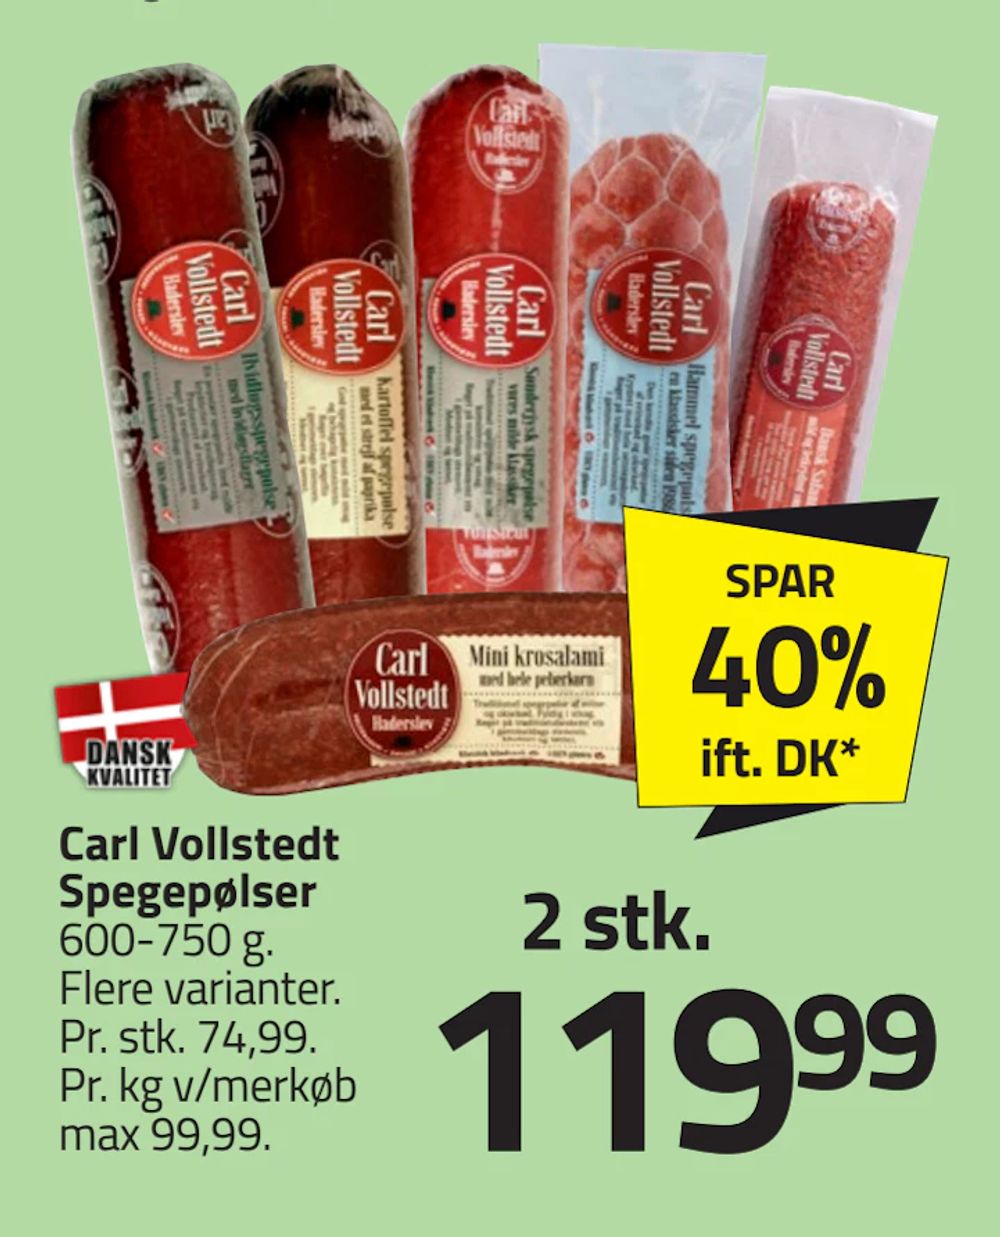 Tilbud på Carl Vollstedt Spegepølser fra Fleggaard til 119,99 kr.